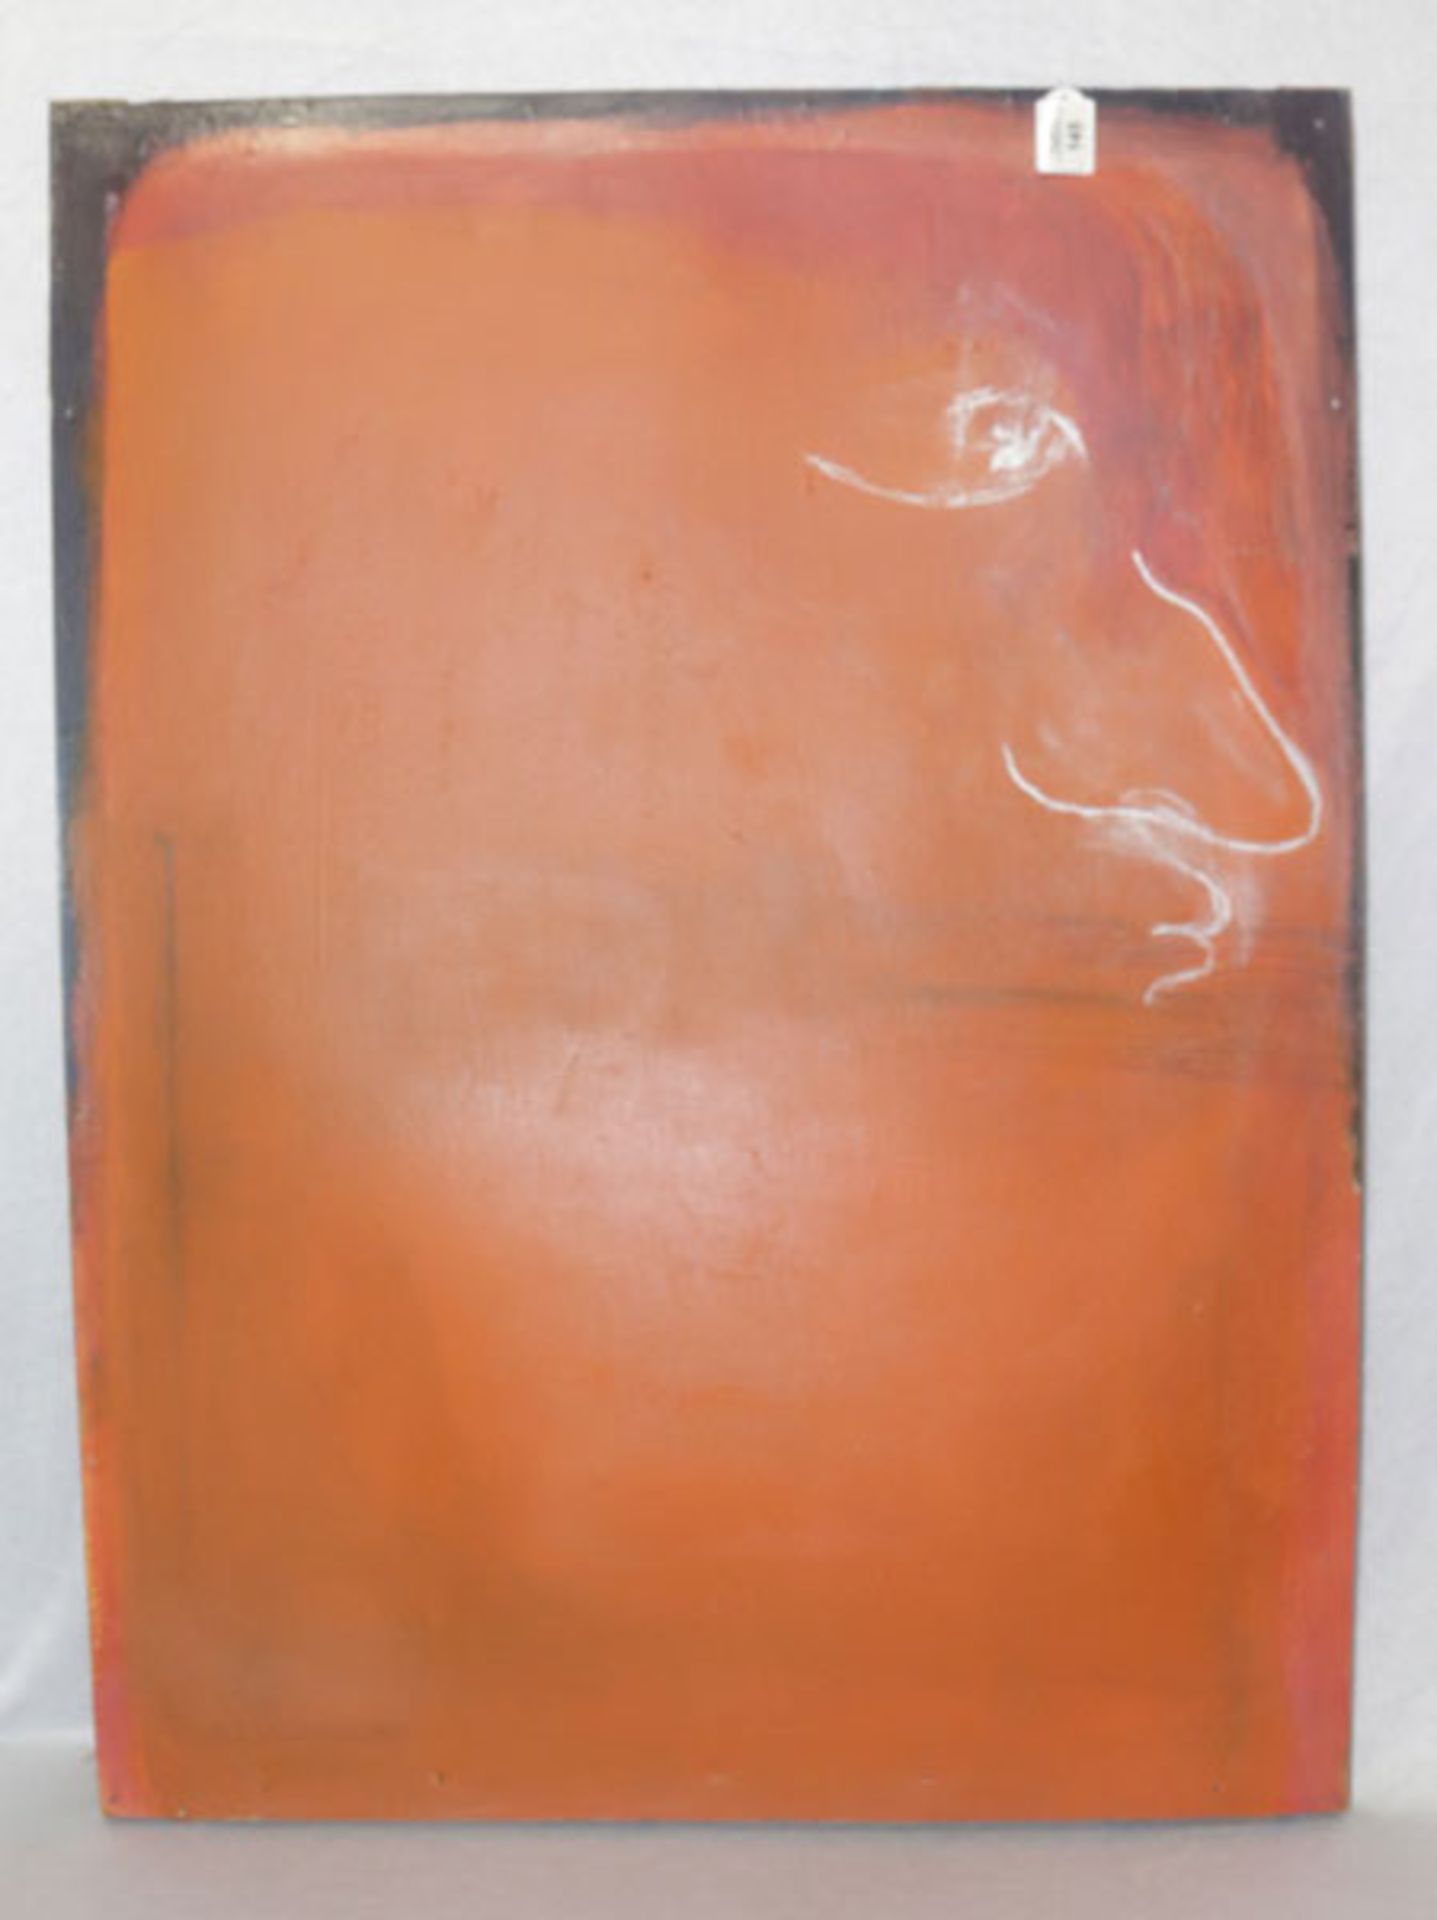 Gemälde ÖL/Malkarton 'Porträt auf Orange', rückseitig bez. Bail, 1996, ohne Rahmung, Karton hat Wass